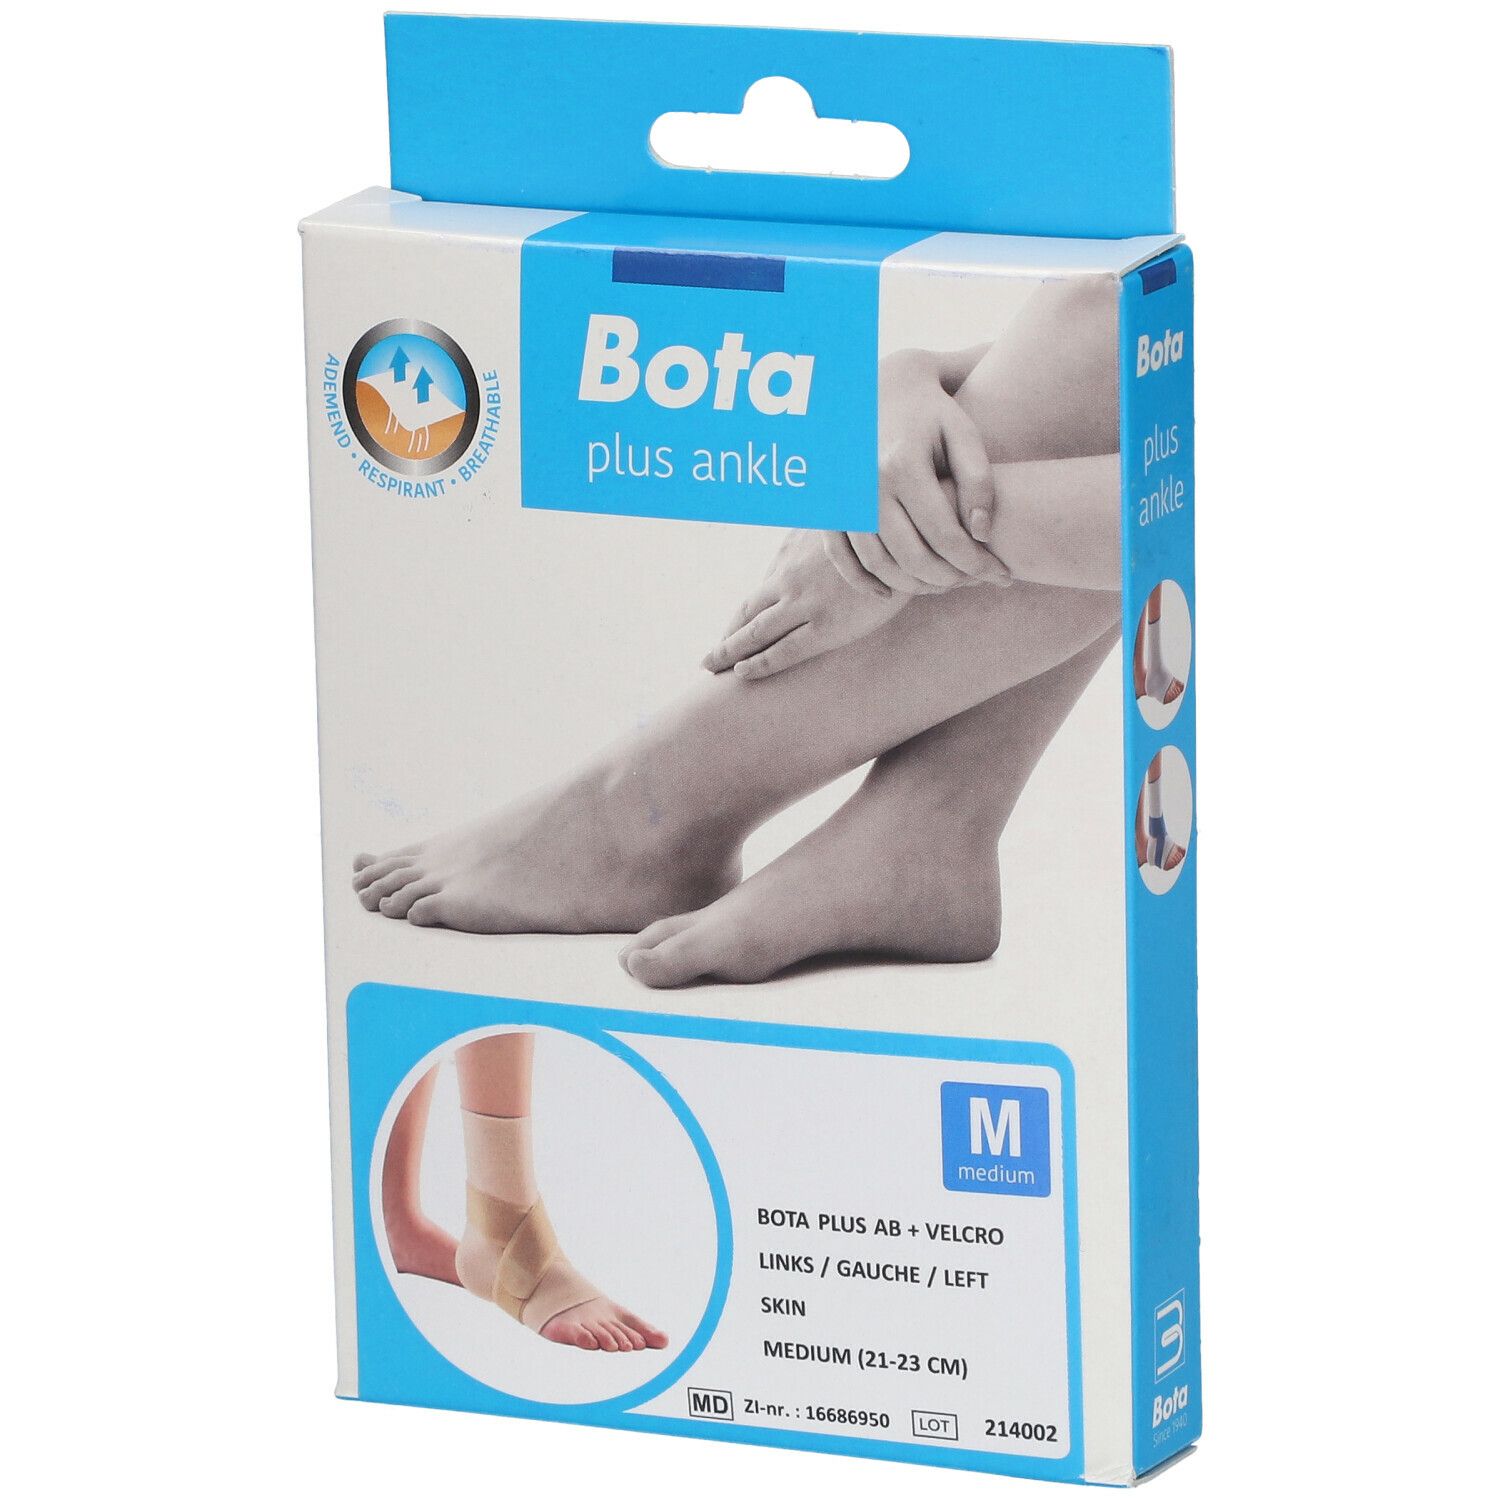 Bota Plus AB Cheville + Velcro Gauche Skin Medium